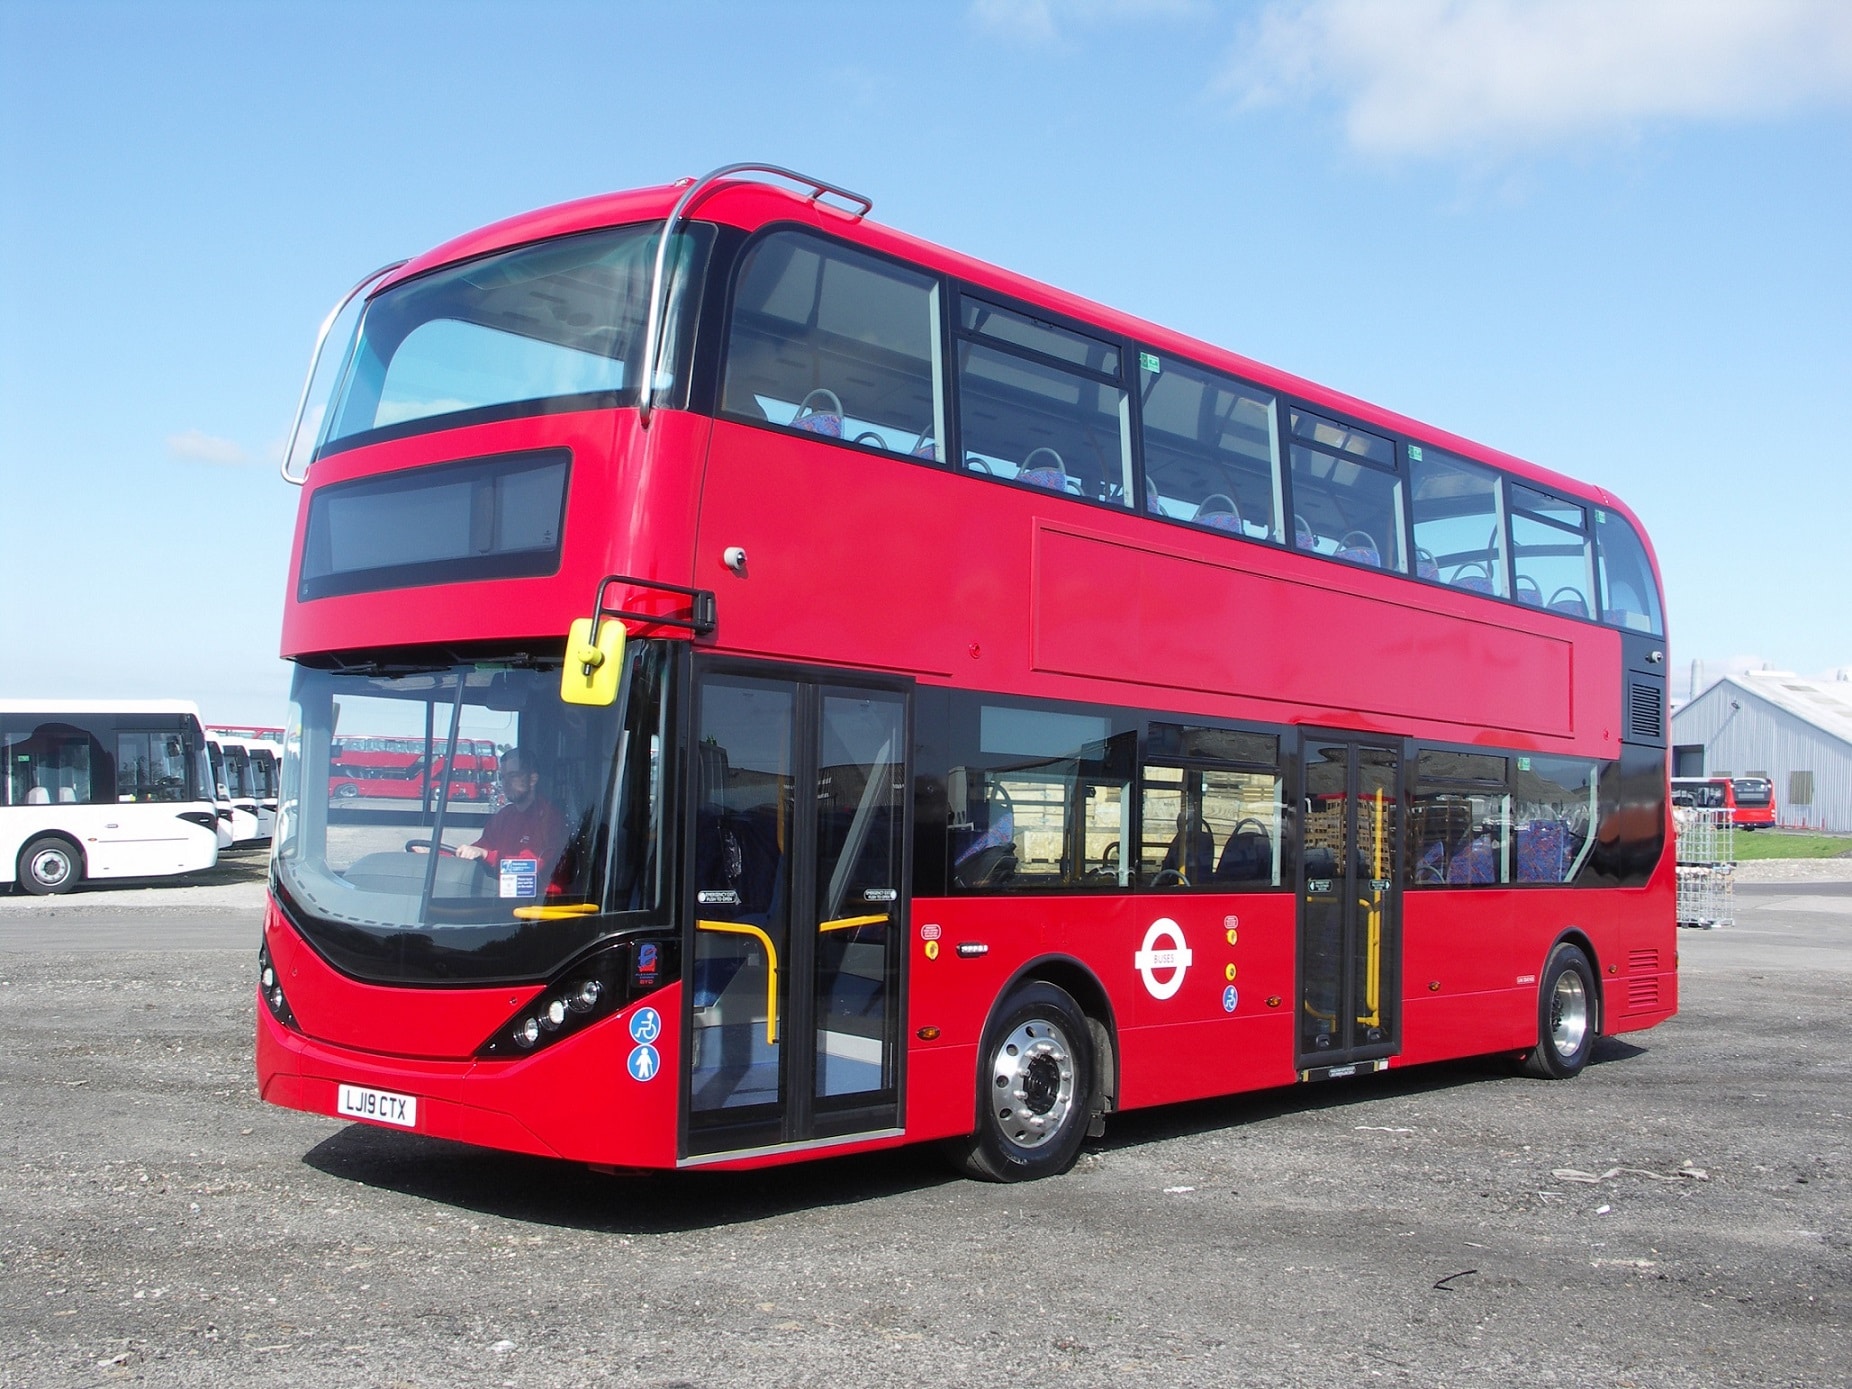 Zero emission bus for London